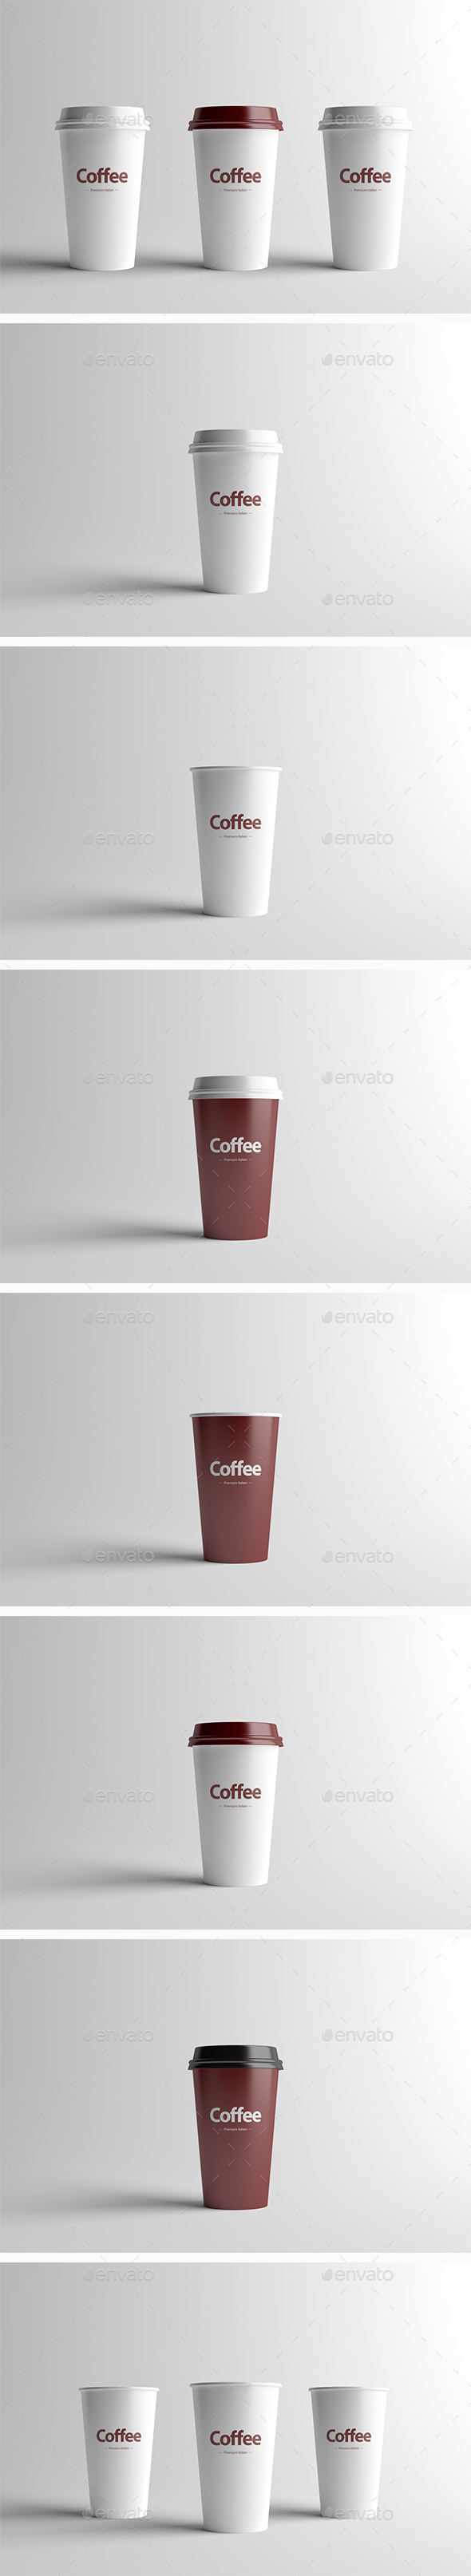 Download Paper Coffee Cup Packaging Mock-Up - Medium by Zeisla ...